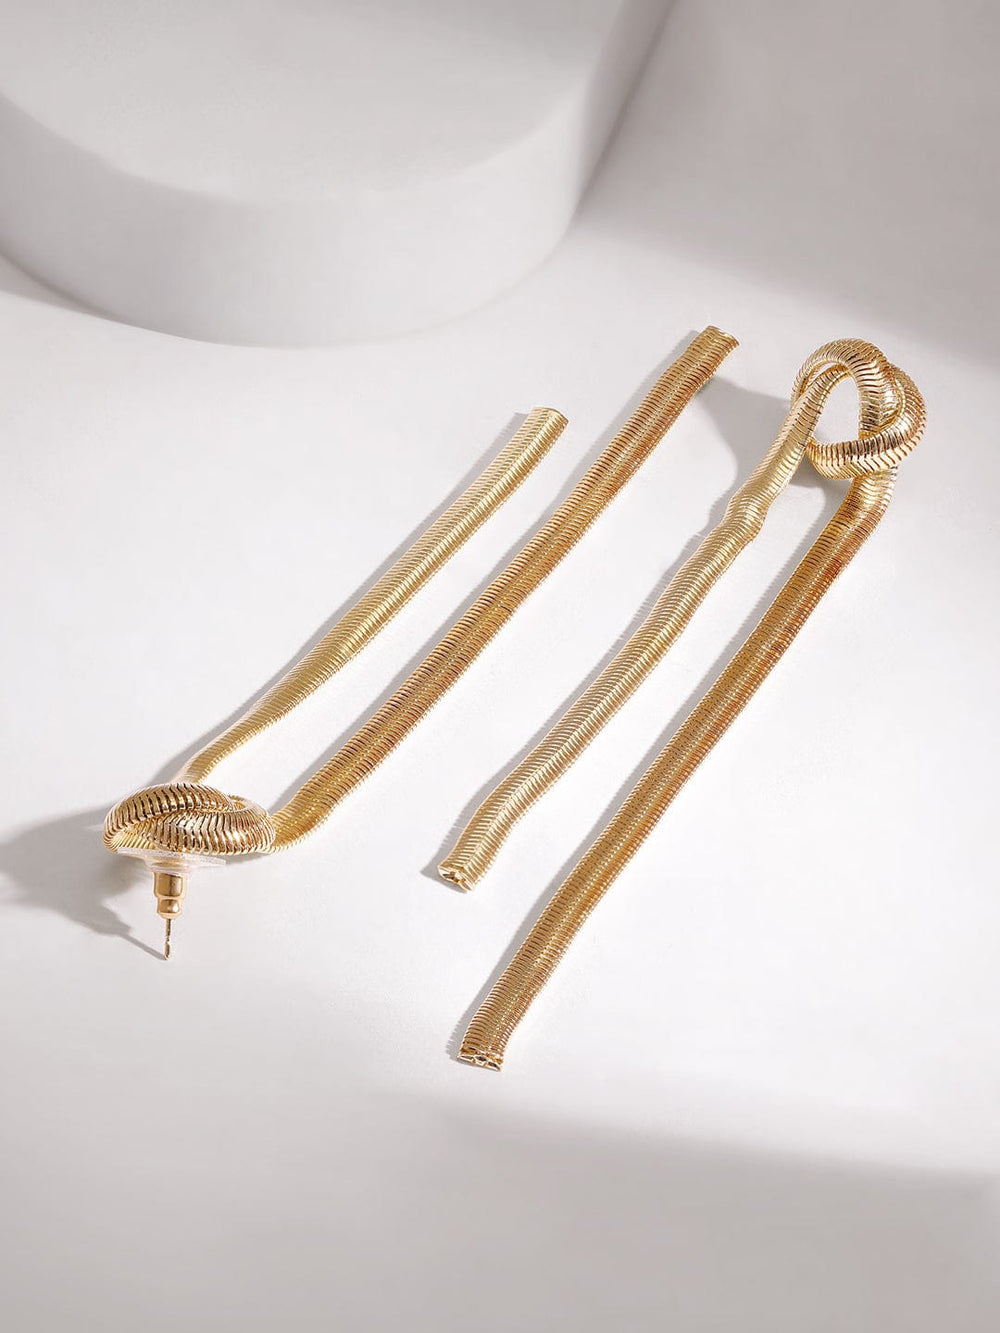 Rubans Voguish Women's 18KT Gold Plated Linked Chain Shoulder Duster Earrings Drop Earrings